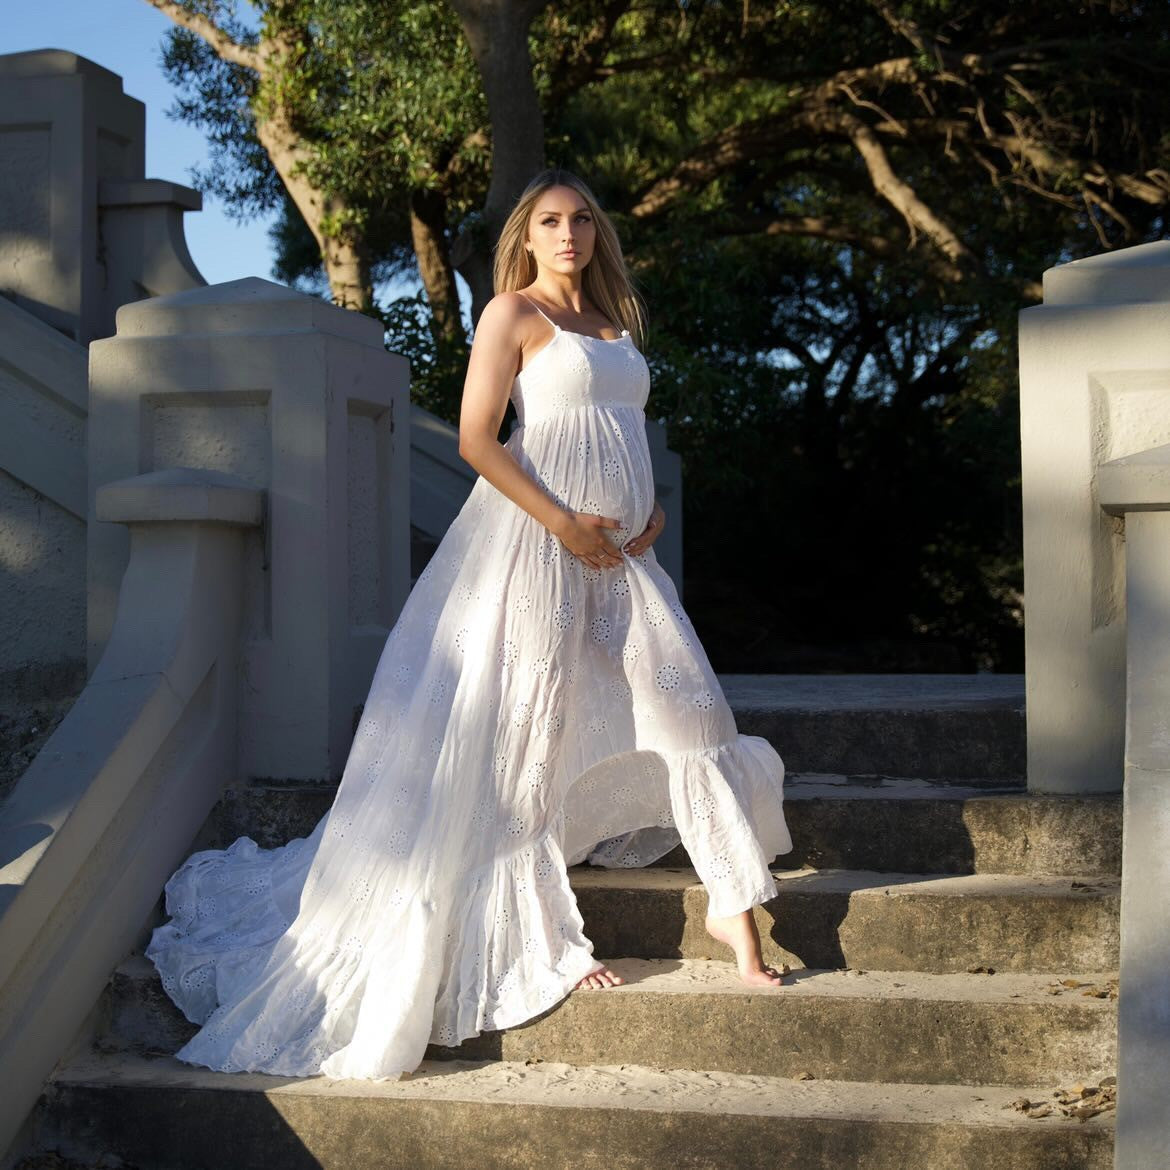 Maternity Photoshoot Dress Hire - White Vintage Cotton Dress